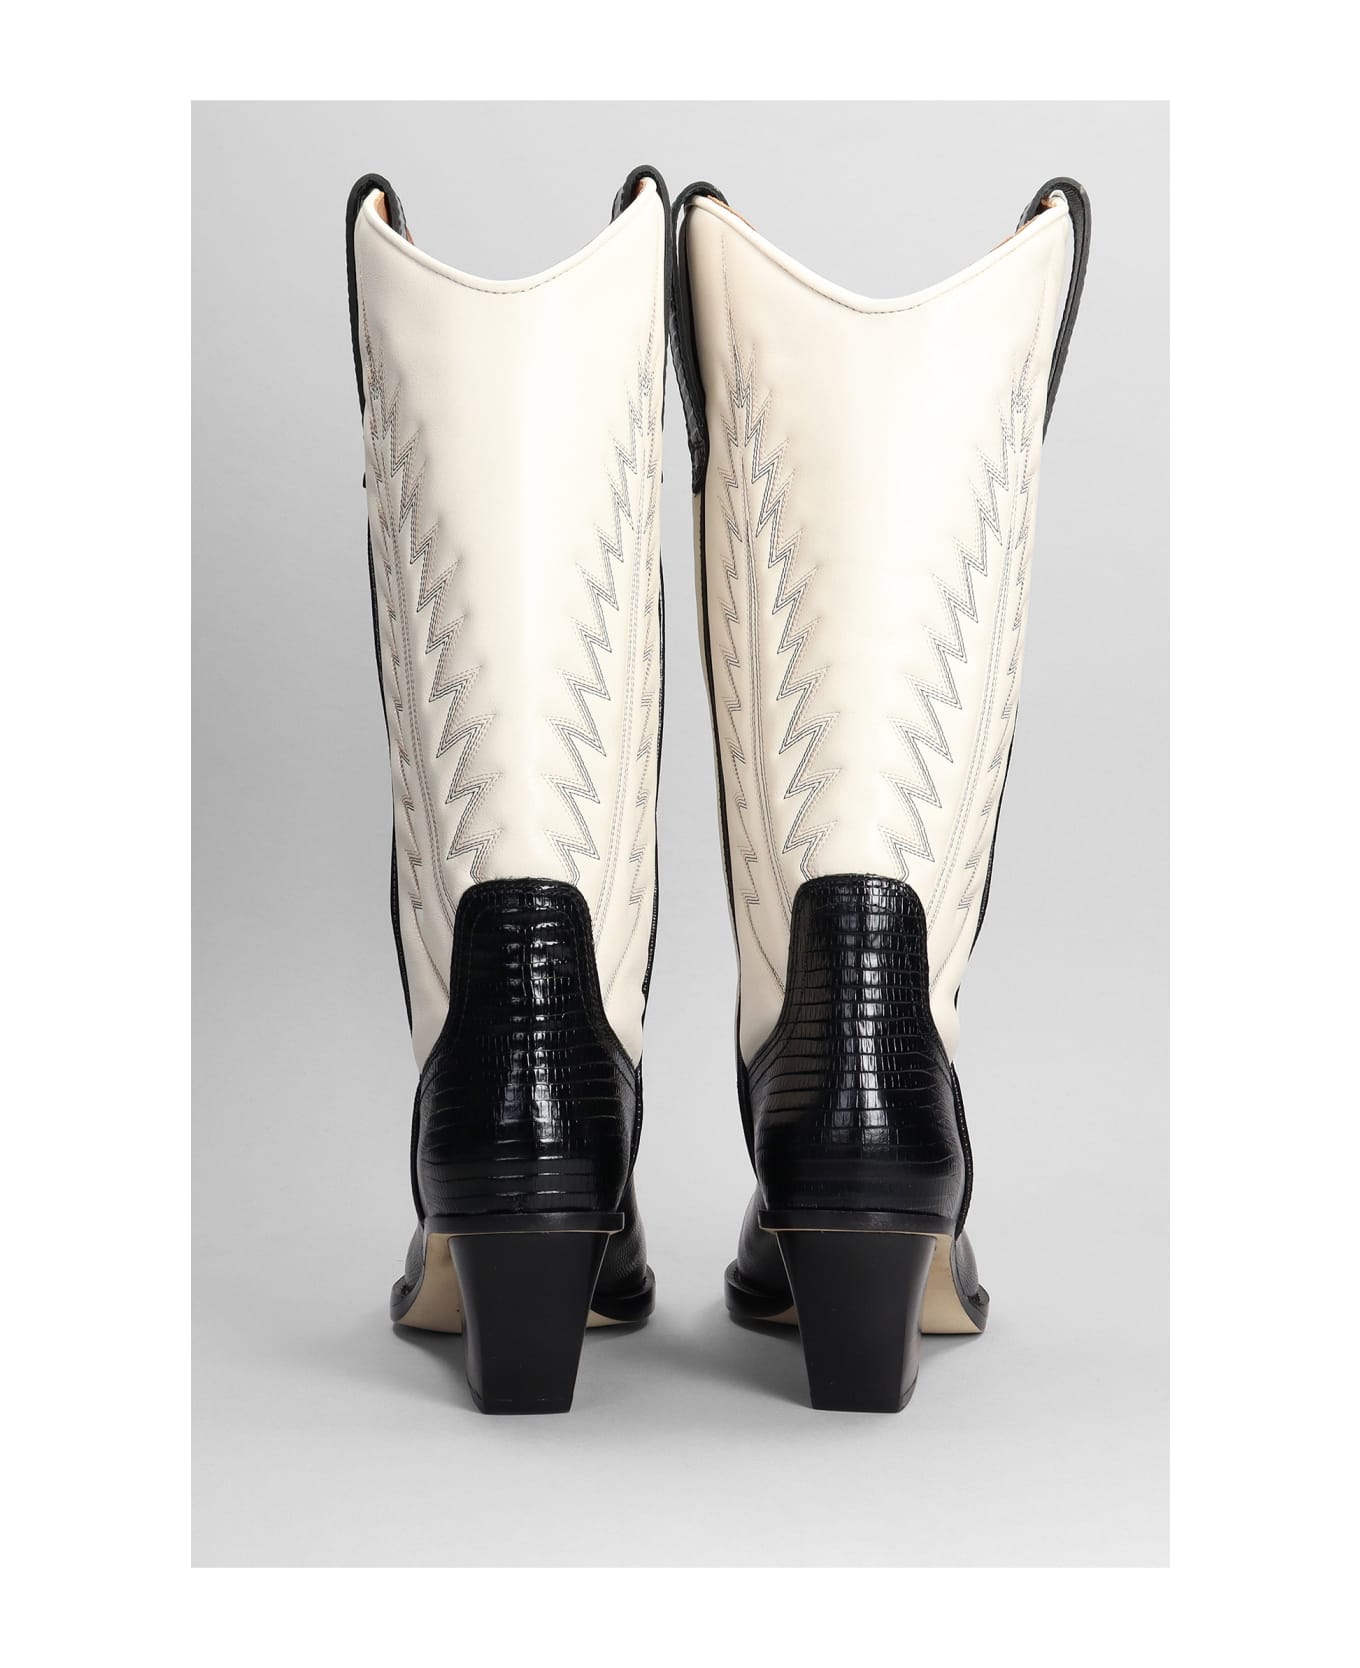 Paris Texas Rosario Texan Boots In Beige Leather